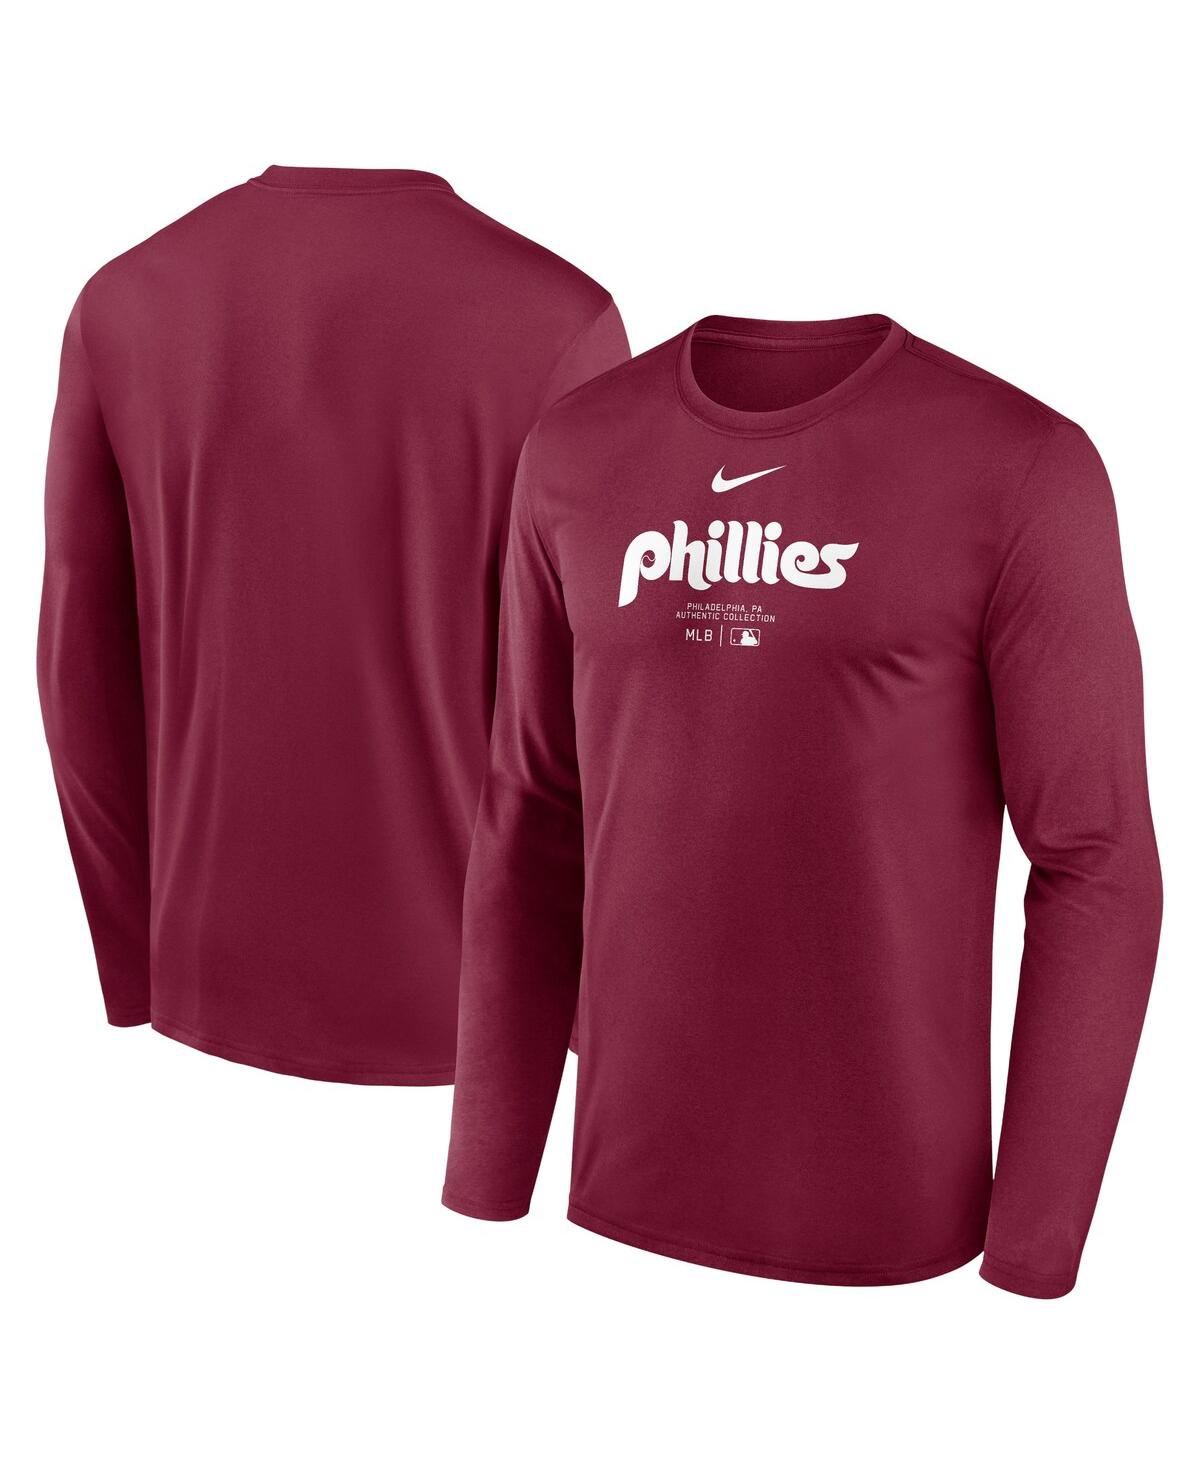 Nike Men's Burgundy Philadelphia Phillies Authentic Collection Practice Performance Long Sleeve T-shirt